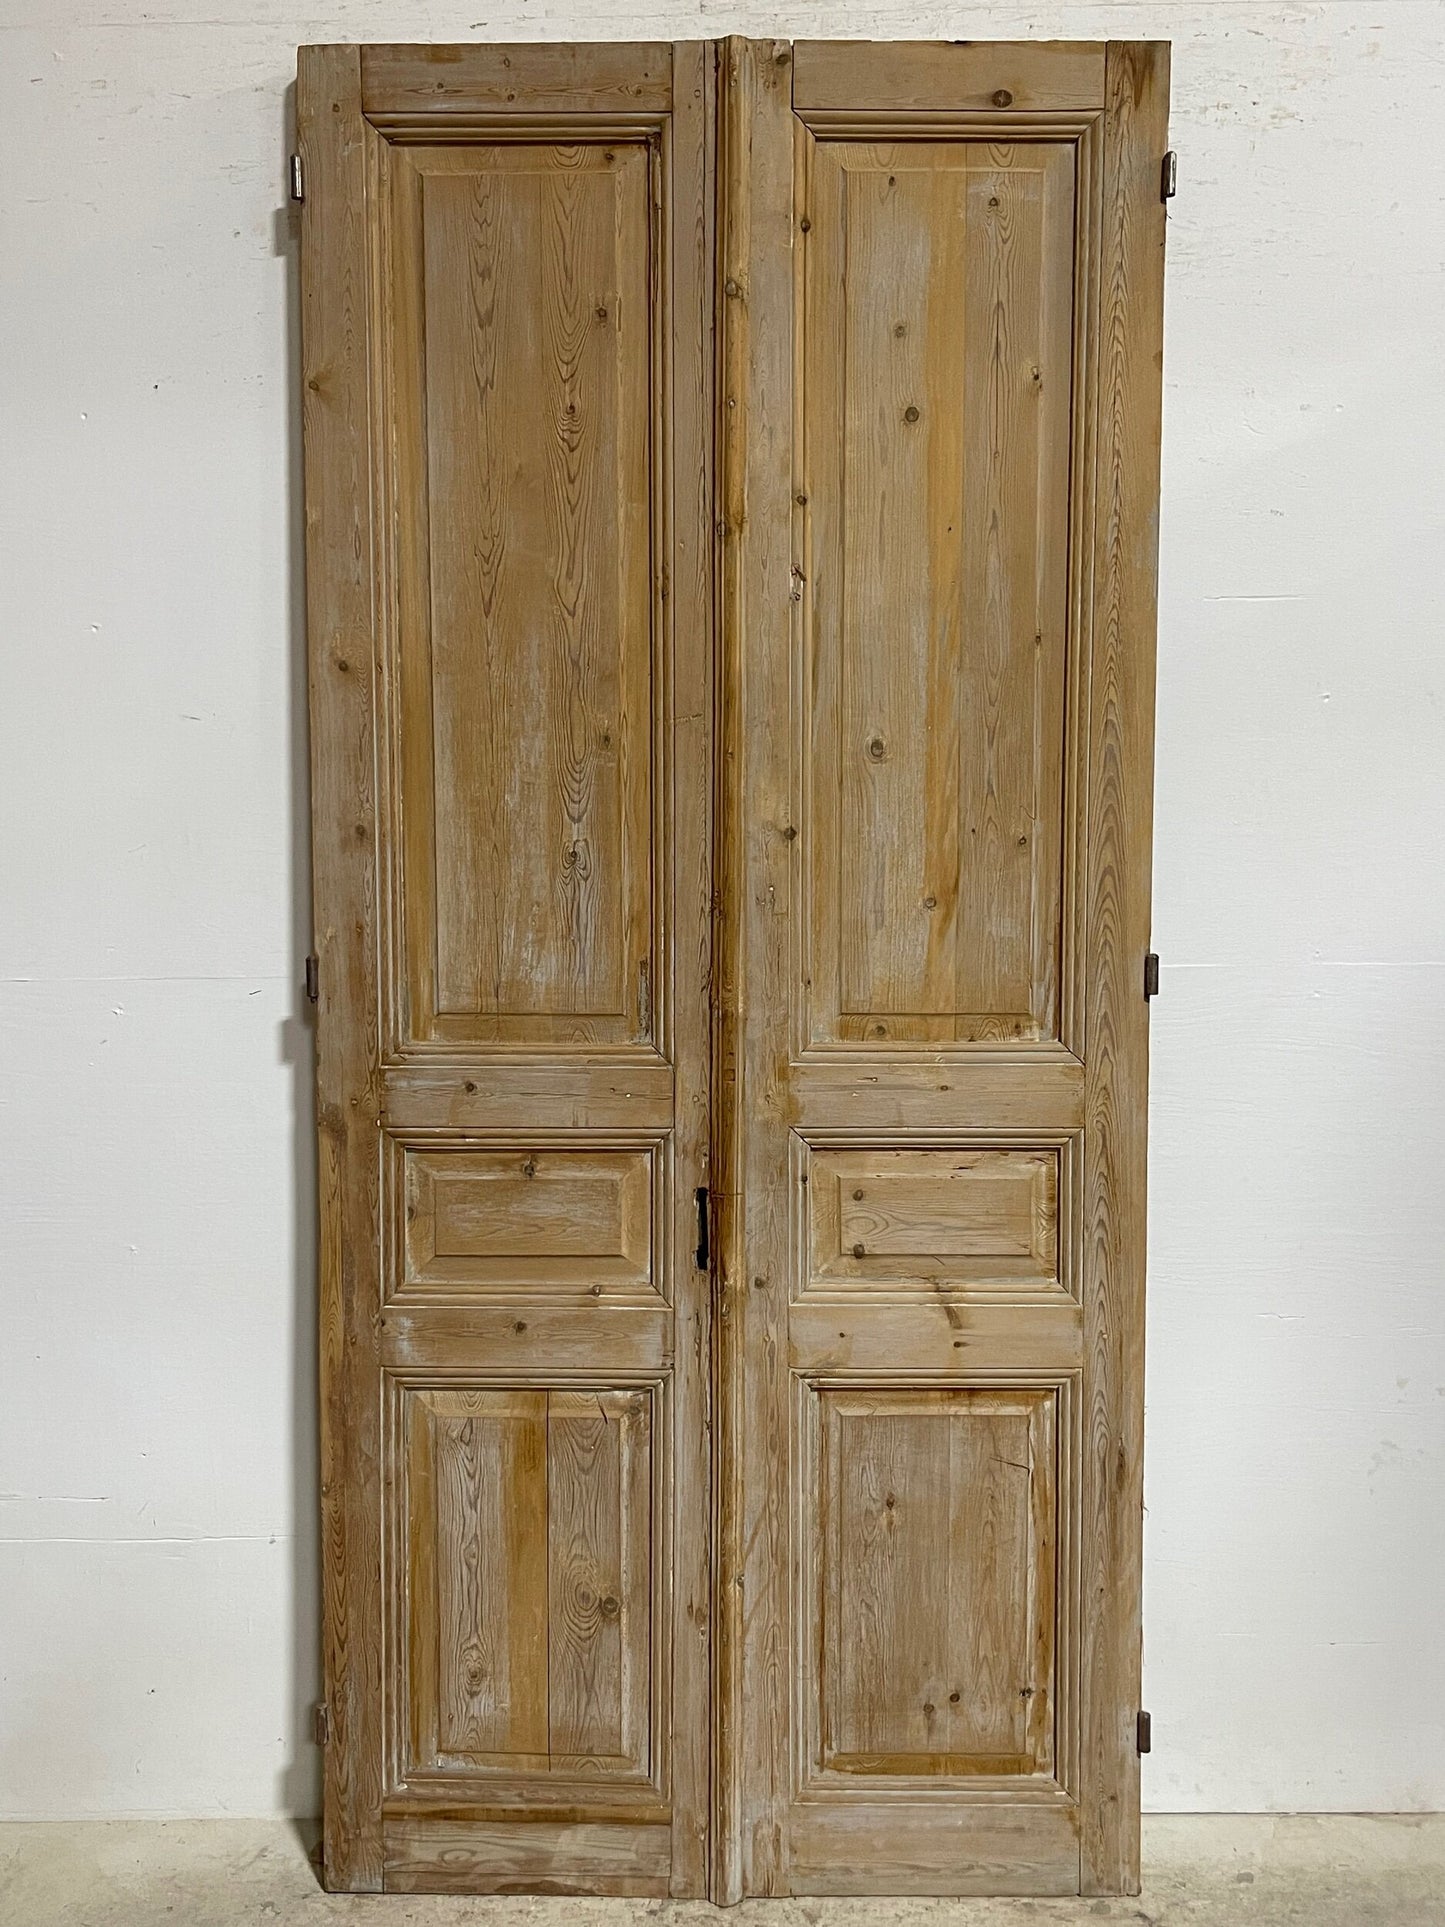 Antique french panel doors (94 x 42.75) I100